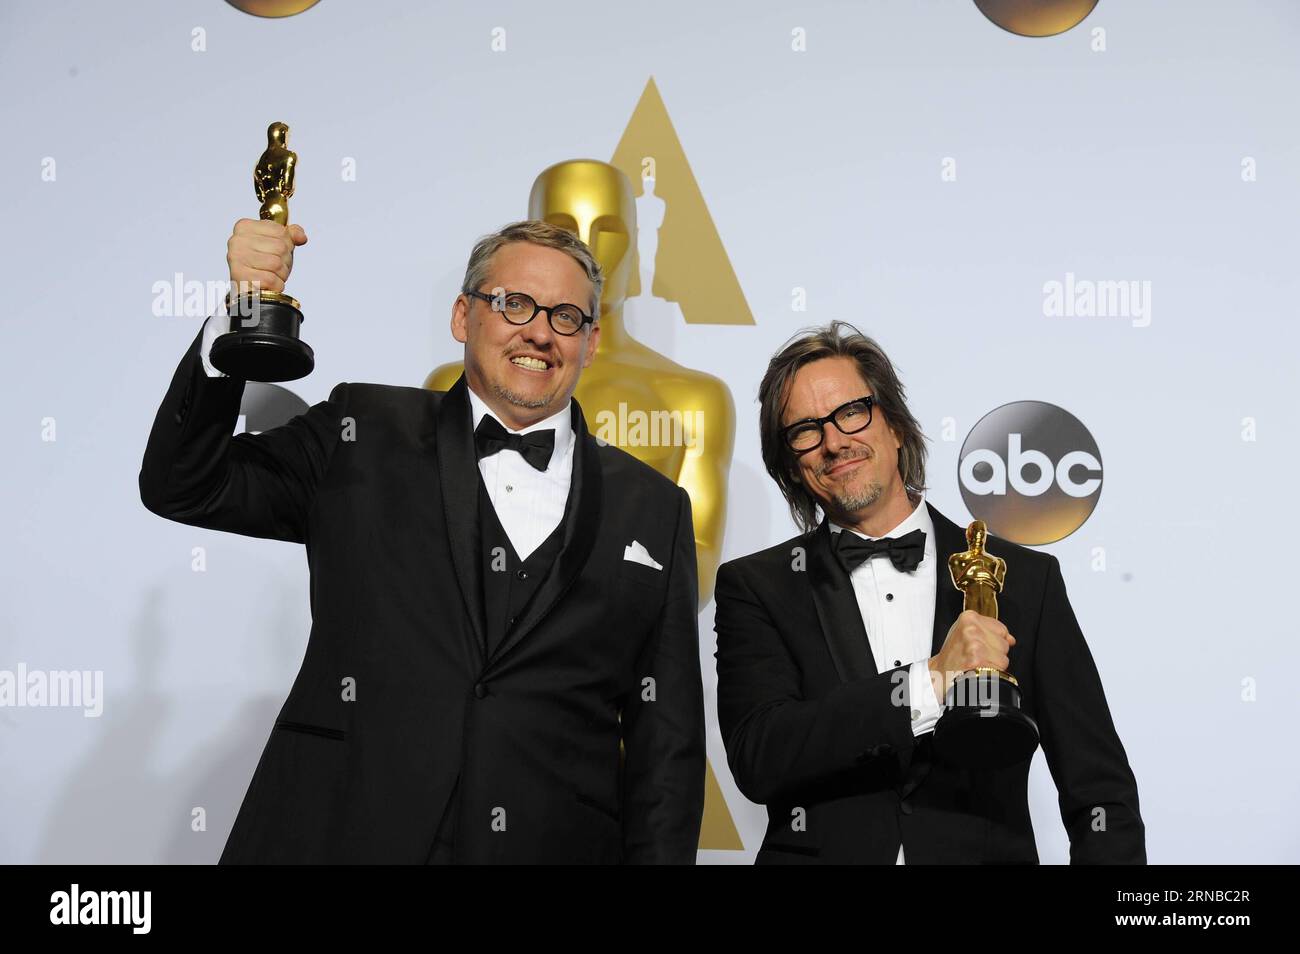 88th Academy Awards - Wikipedia